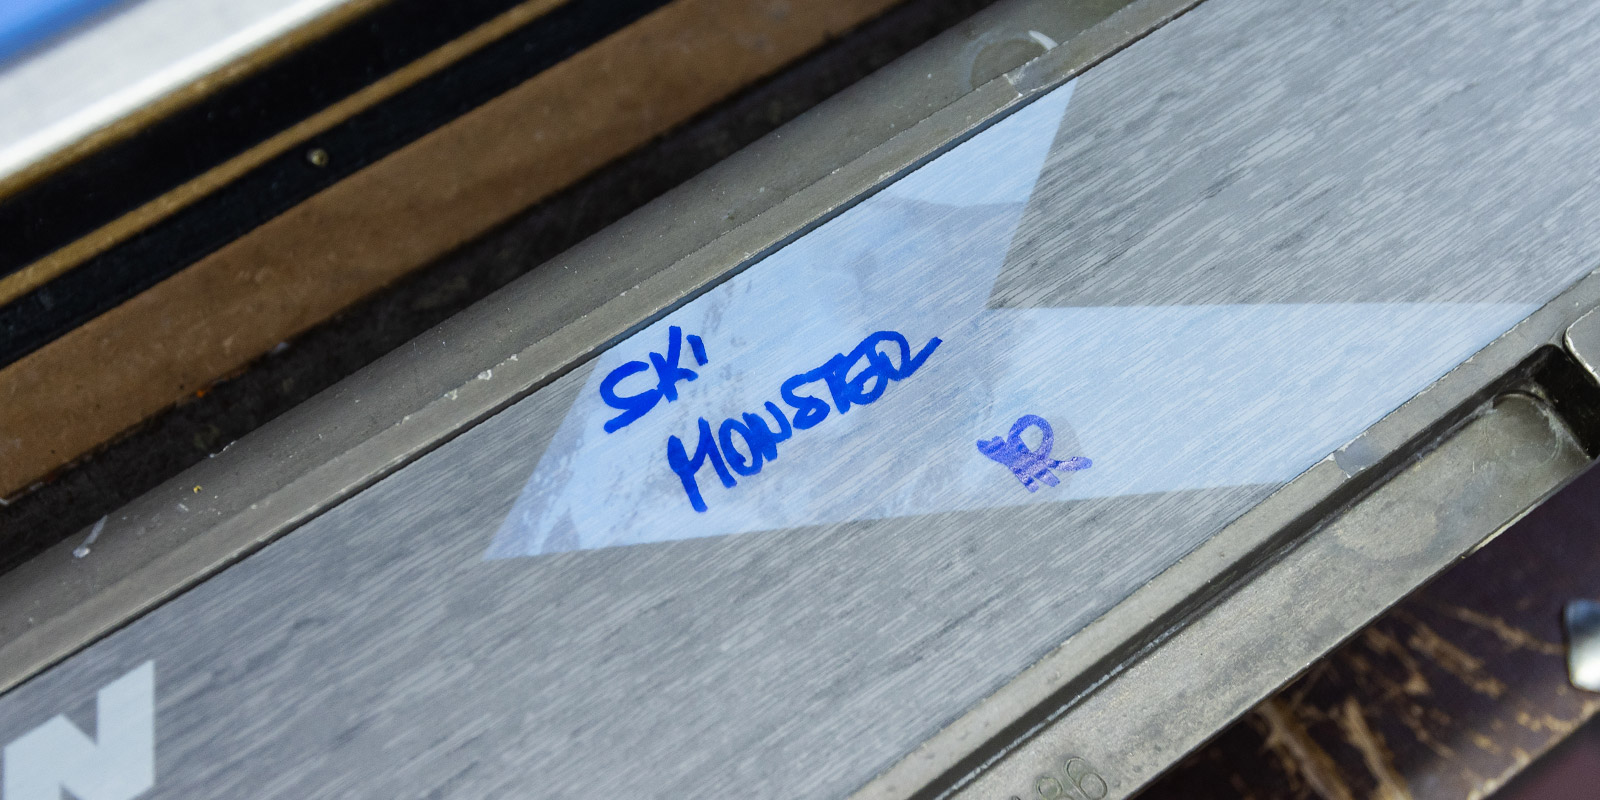 Ski Monster label on a ski made by staff 